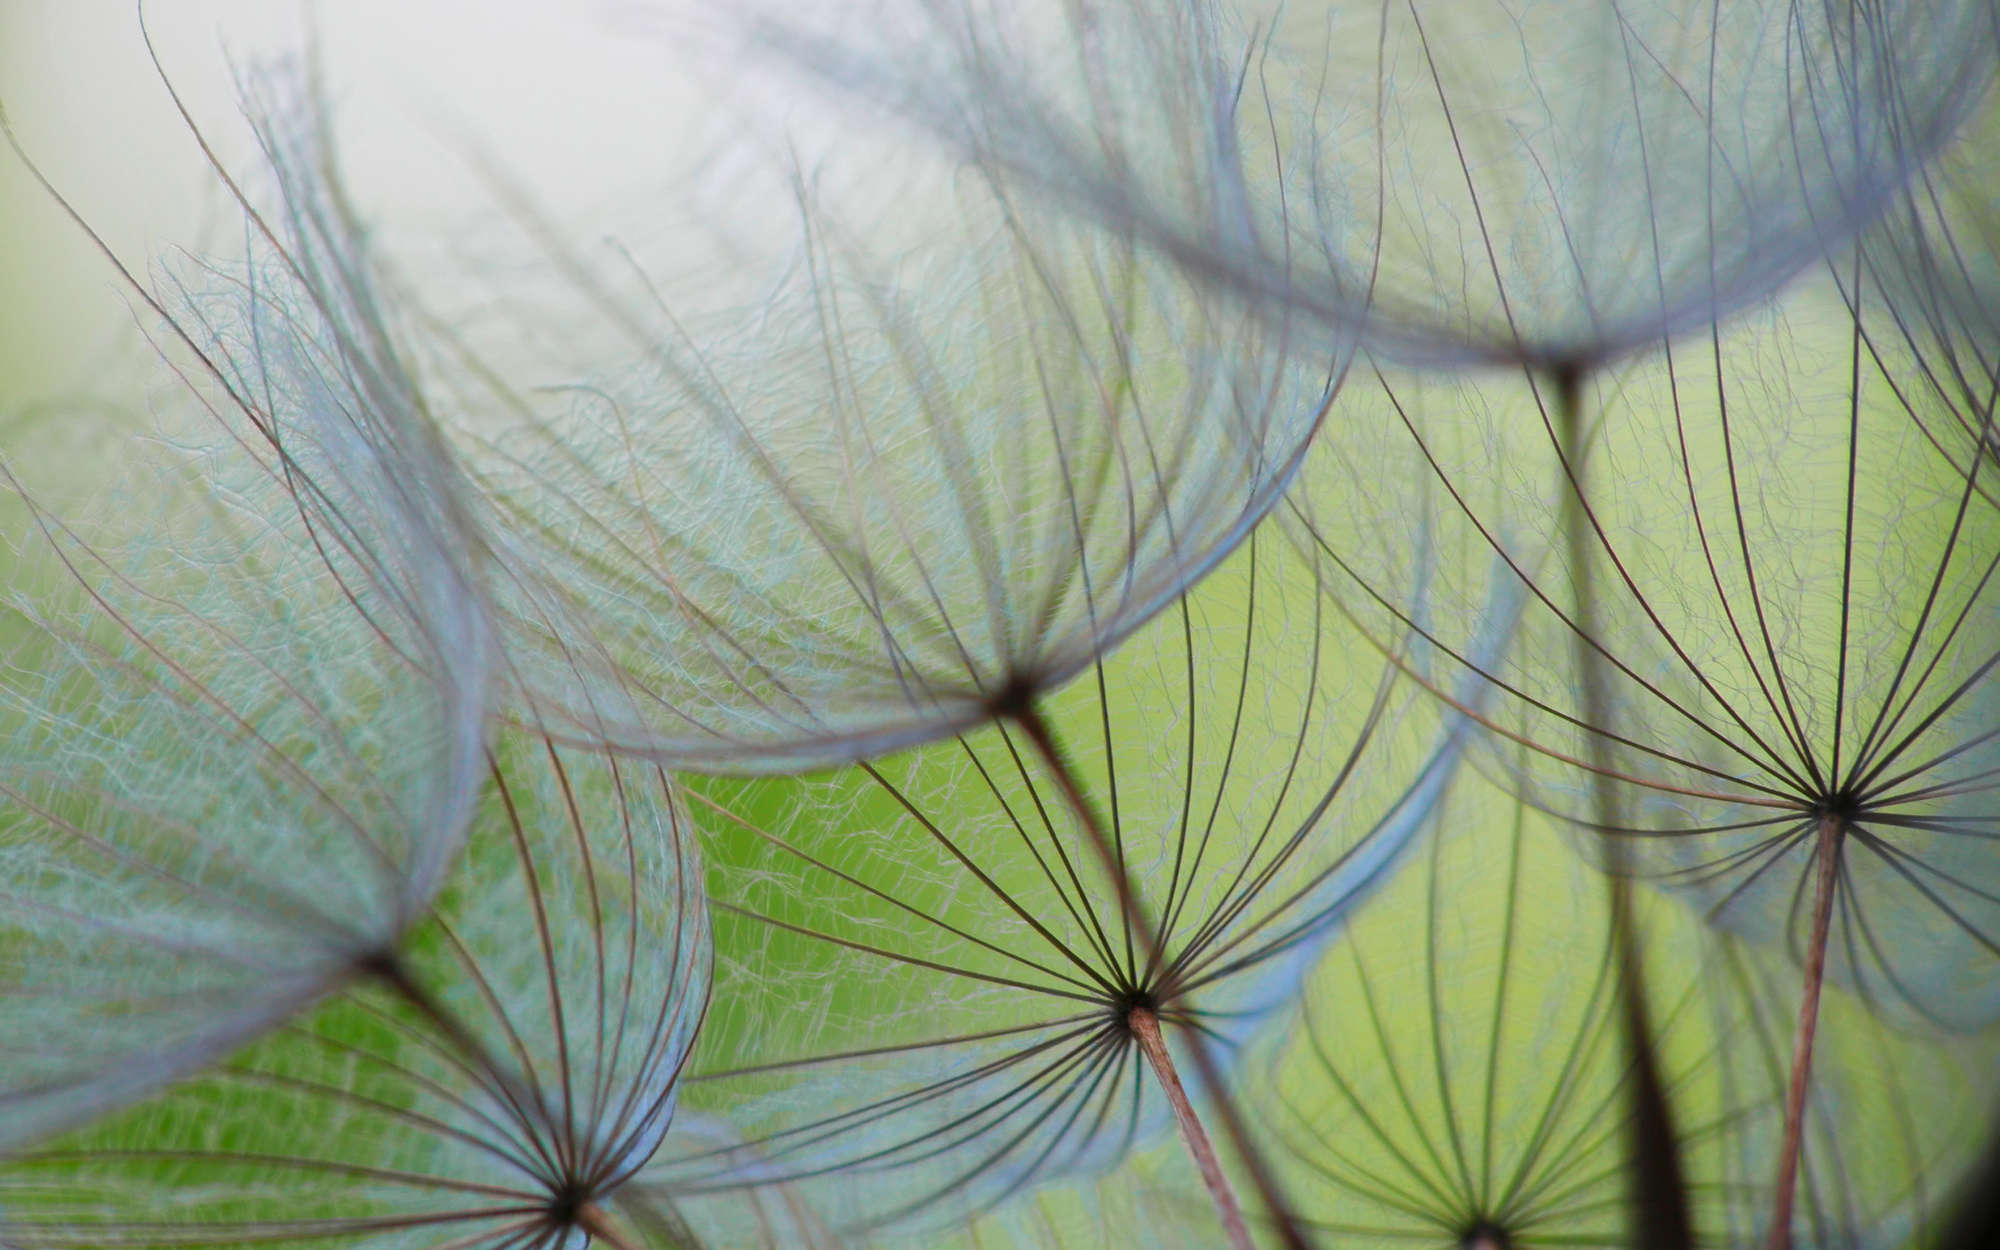             Photo wallpaper detail with dandelions - Matt smooth non-woven
        